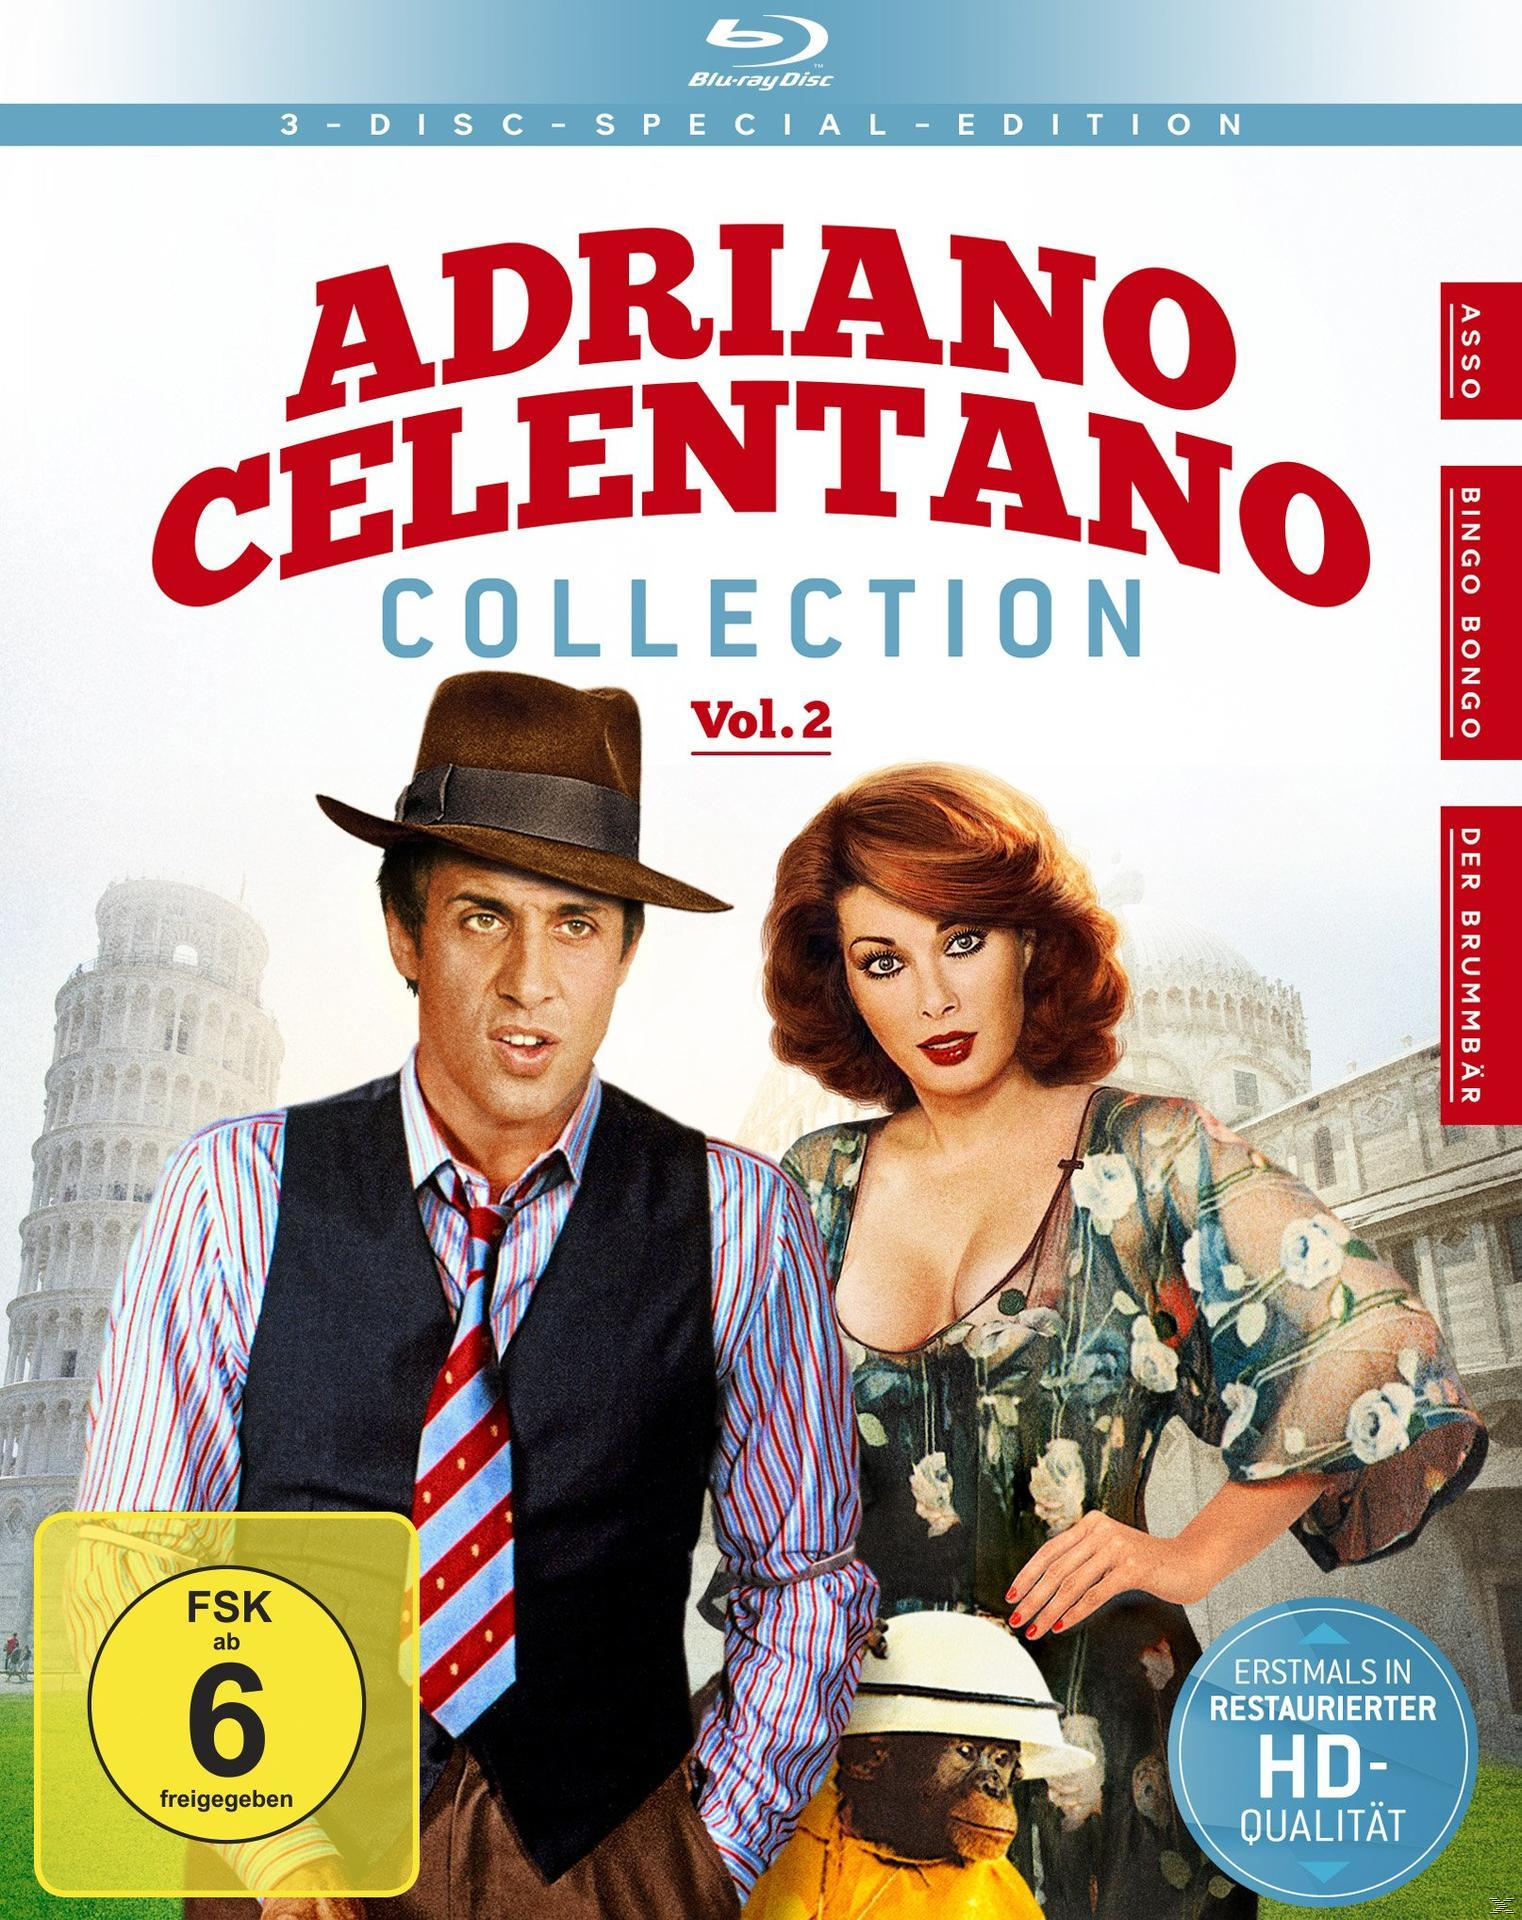 Adriano Celentano - Vol. Blu-ray Collection 2